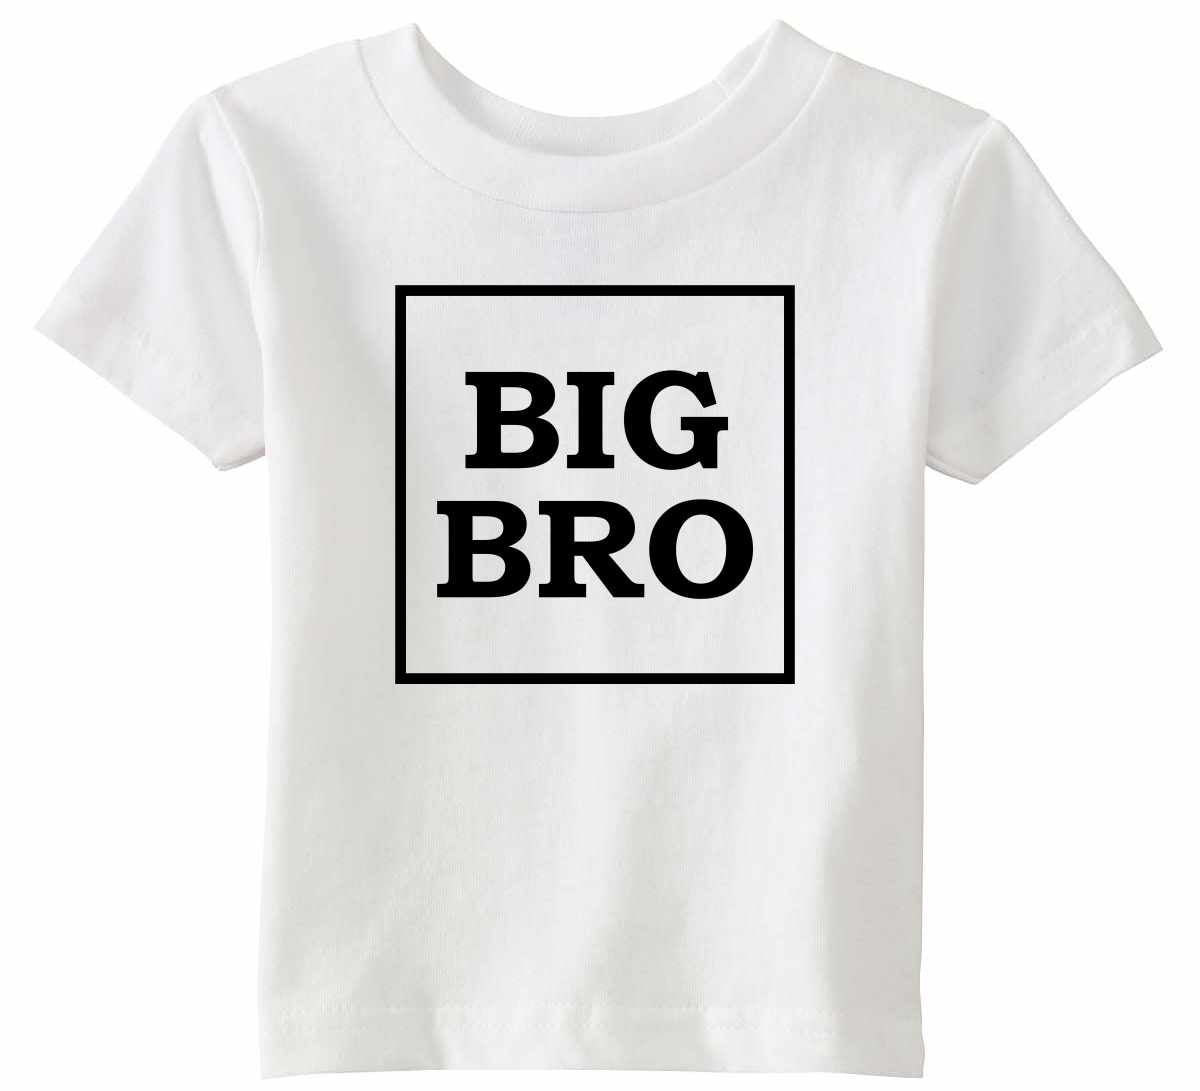 Big Bro on Infant-Toddler T-Shirt (#1246-7)